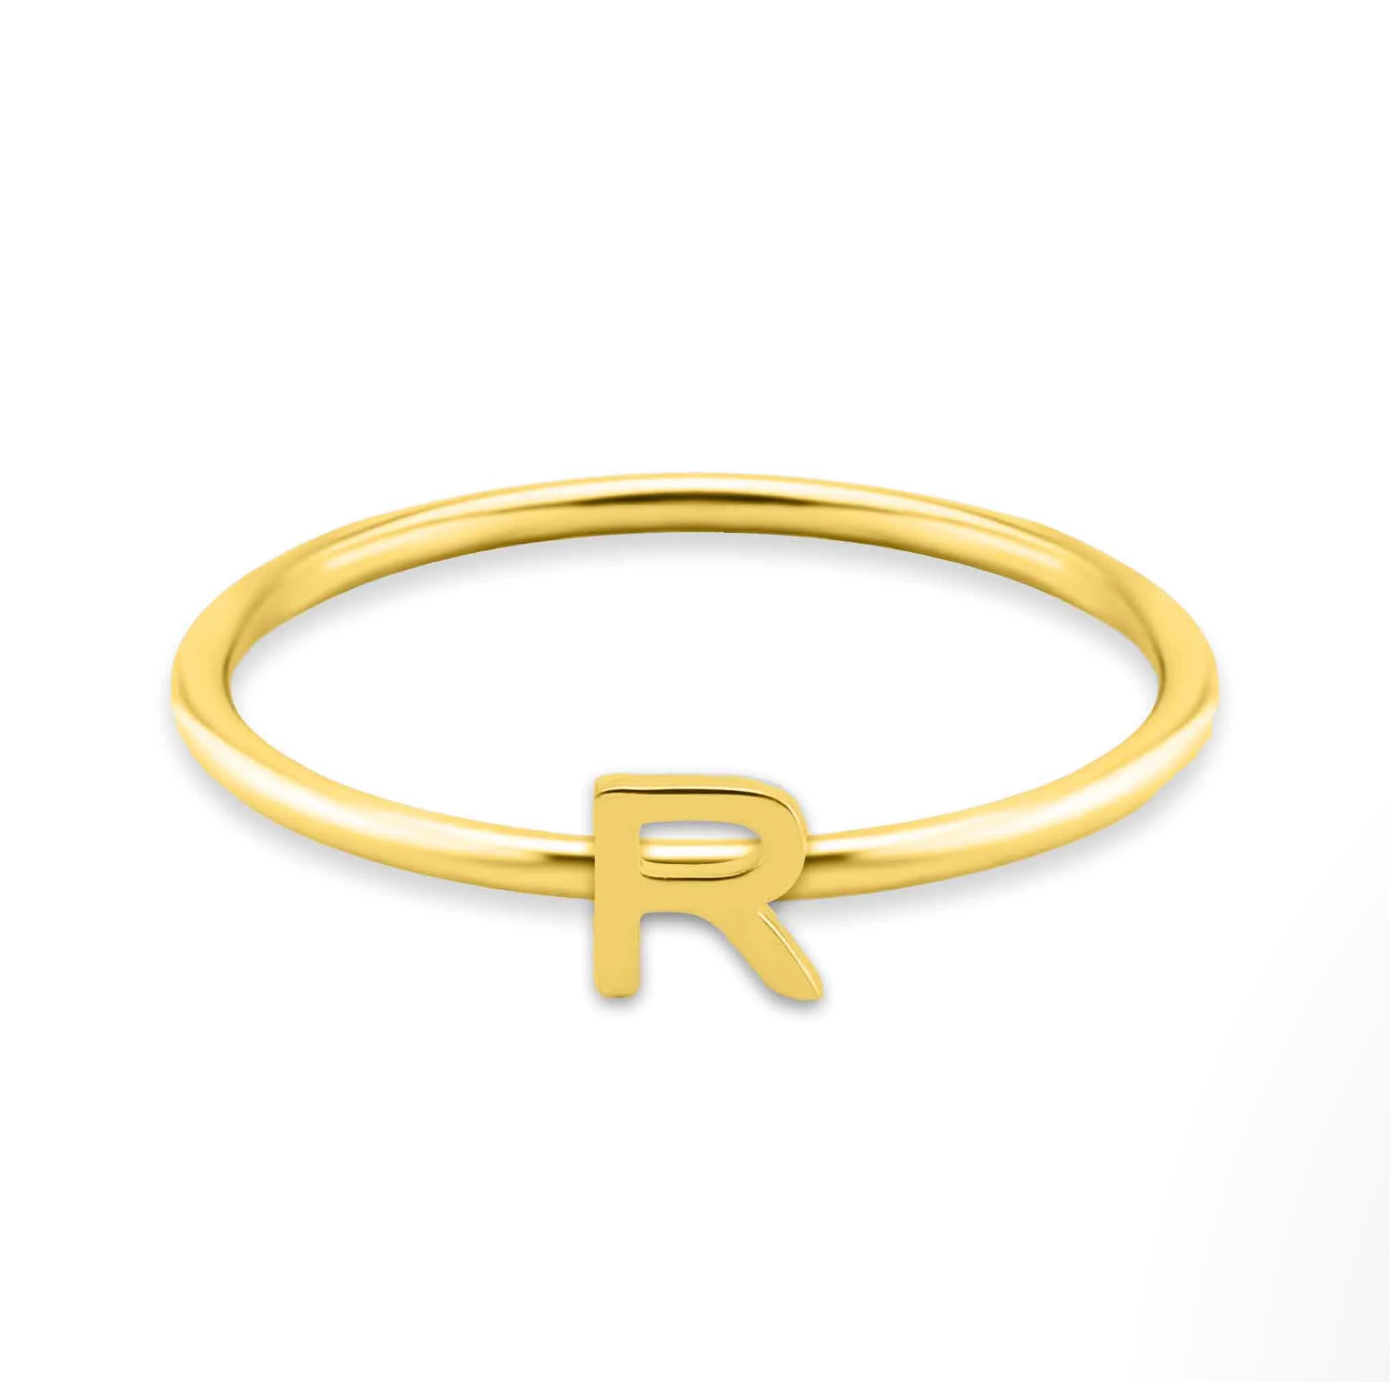 Gold 916 ring r liter | Gold ring designs, Earrings dangle simple, Gold  rings